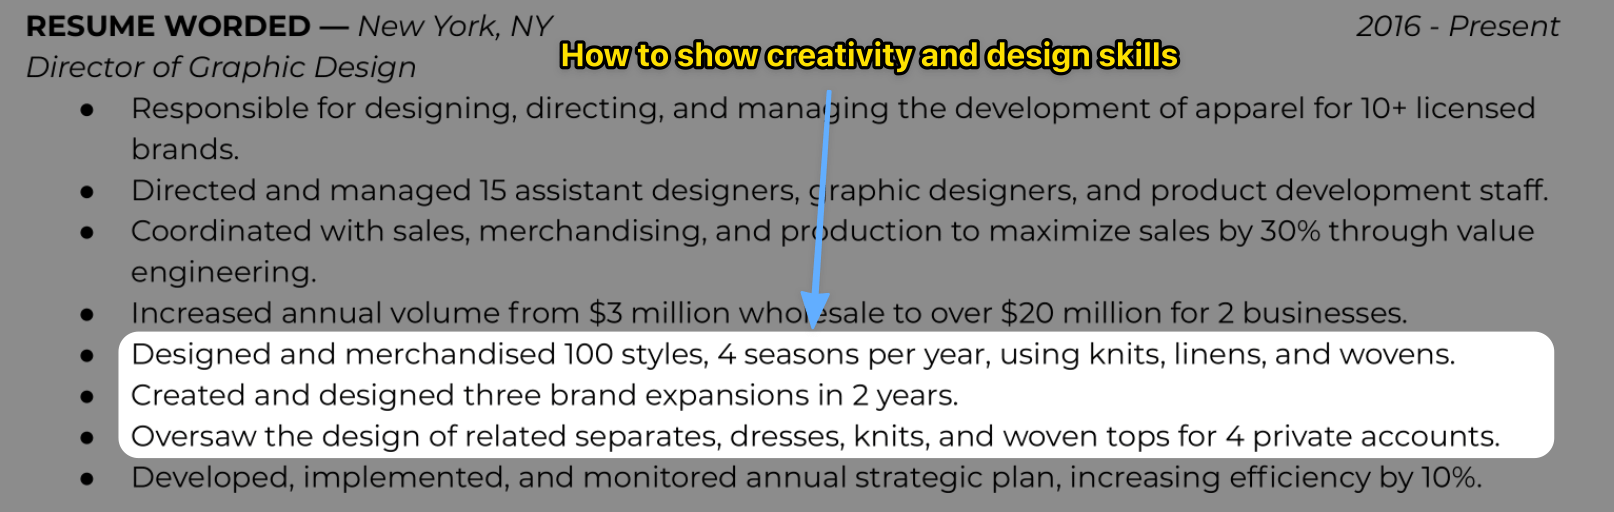 Showcase your creative approach - E-Learning Designer  CV